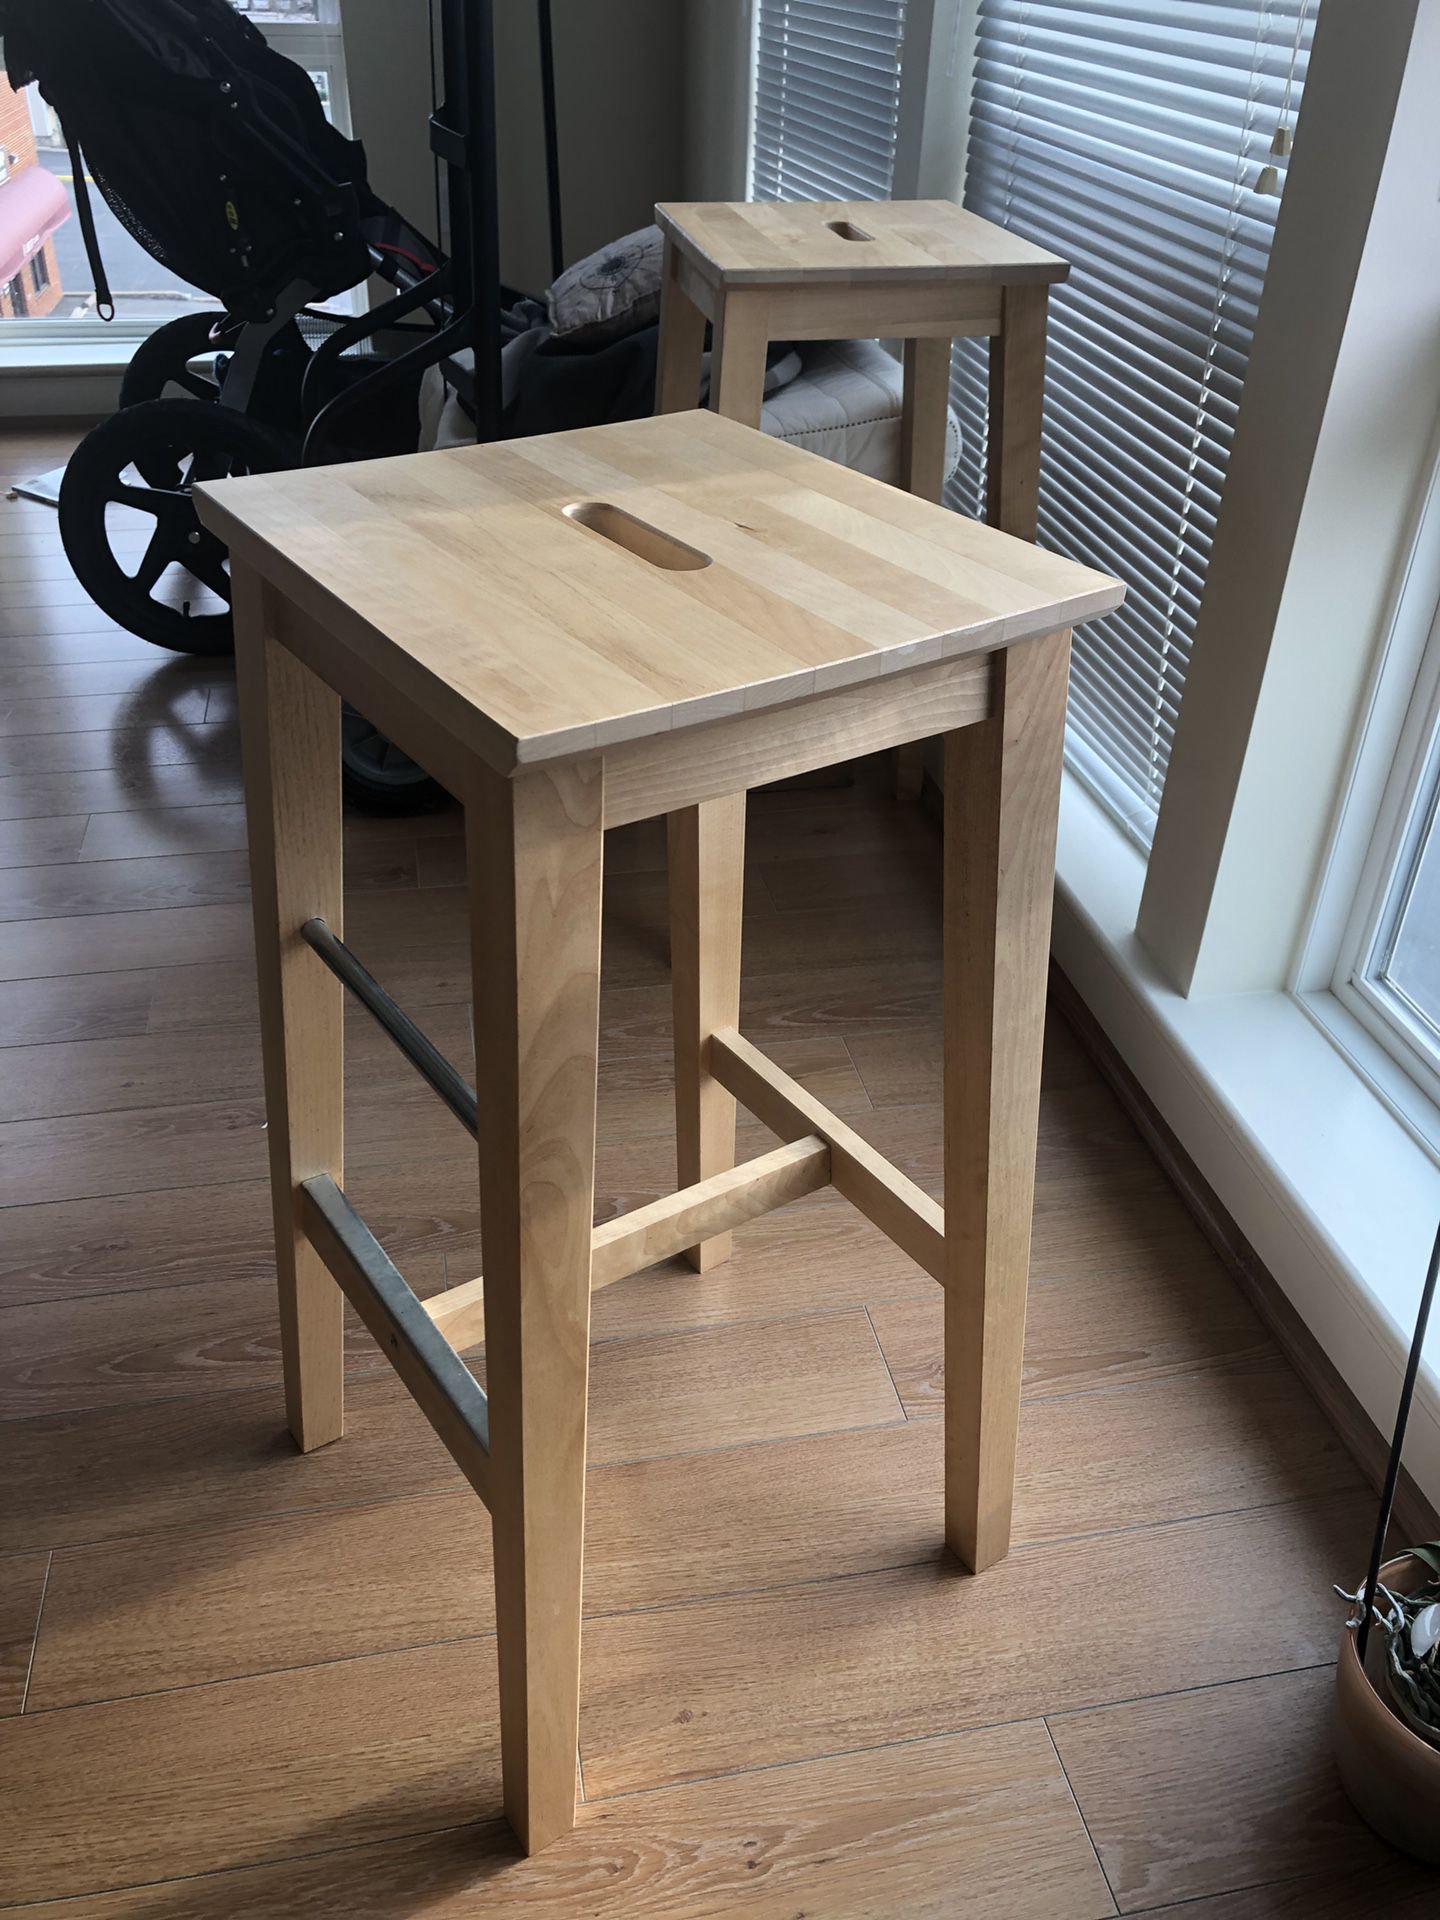 Wood and metal square bar stools